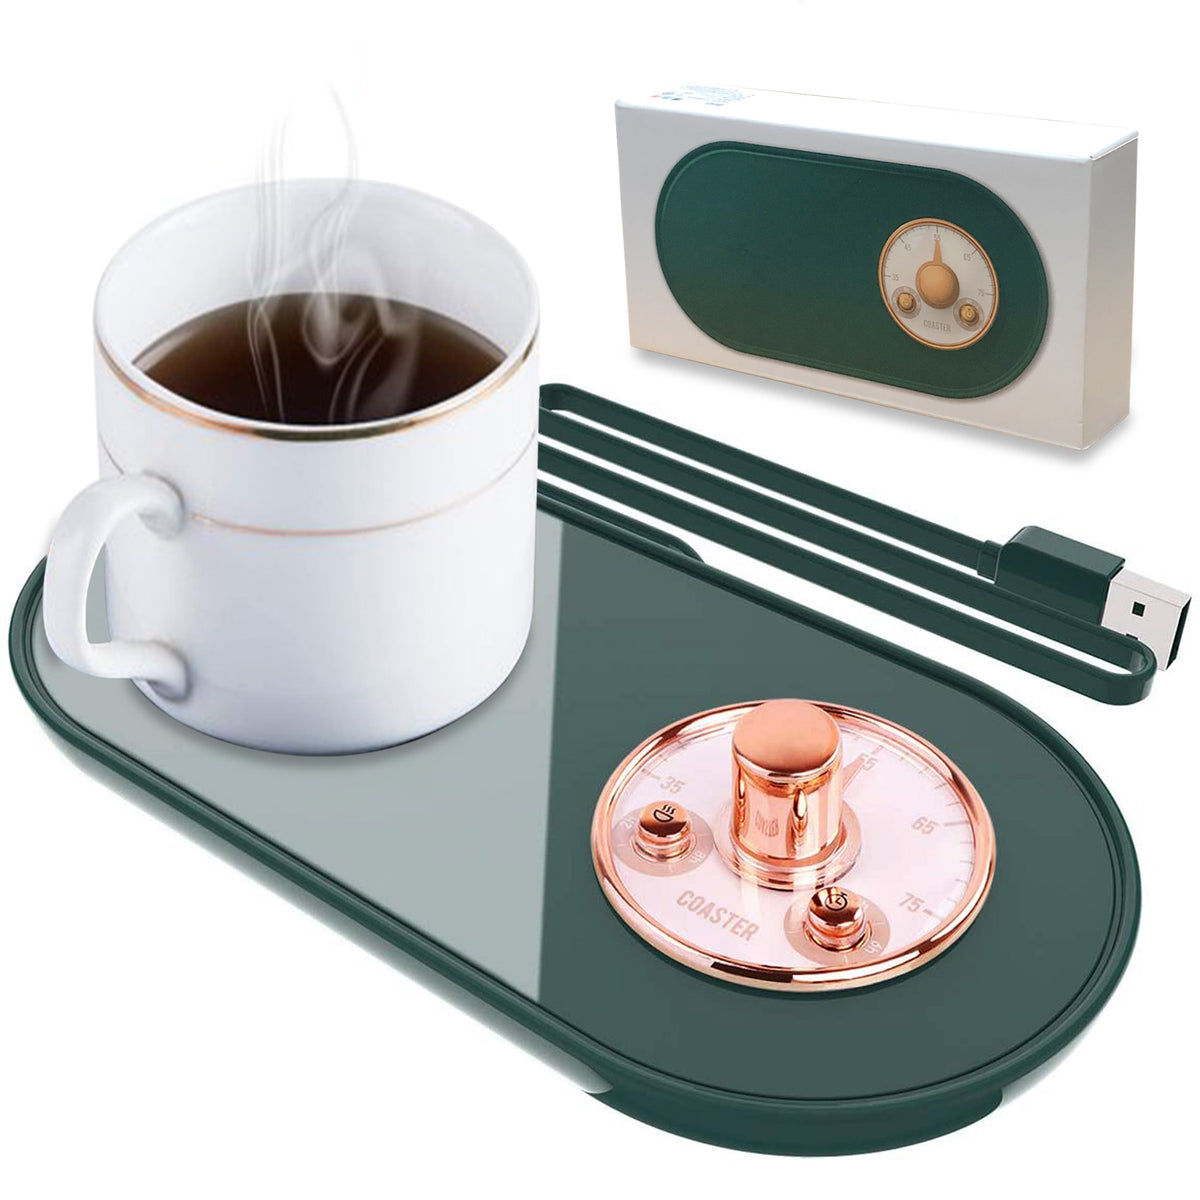 Design HMI  Wireless Temperature Control Hot Beverage Mug (145F – 165F)